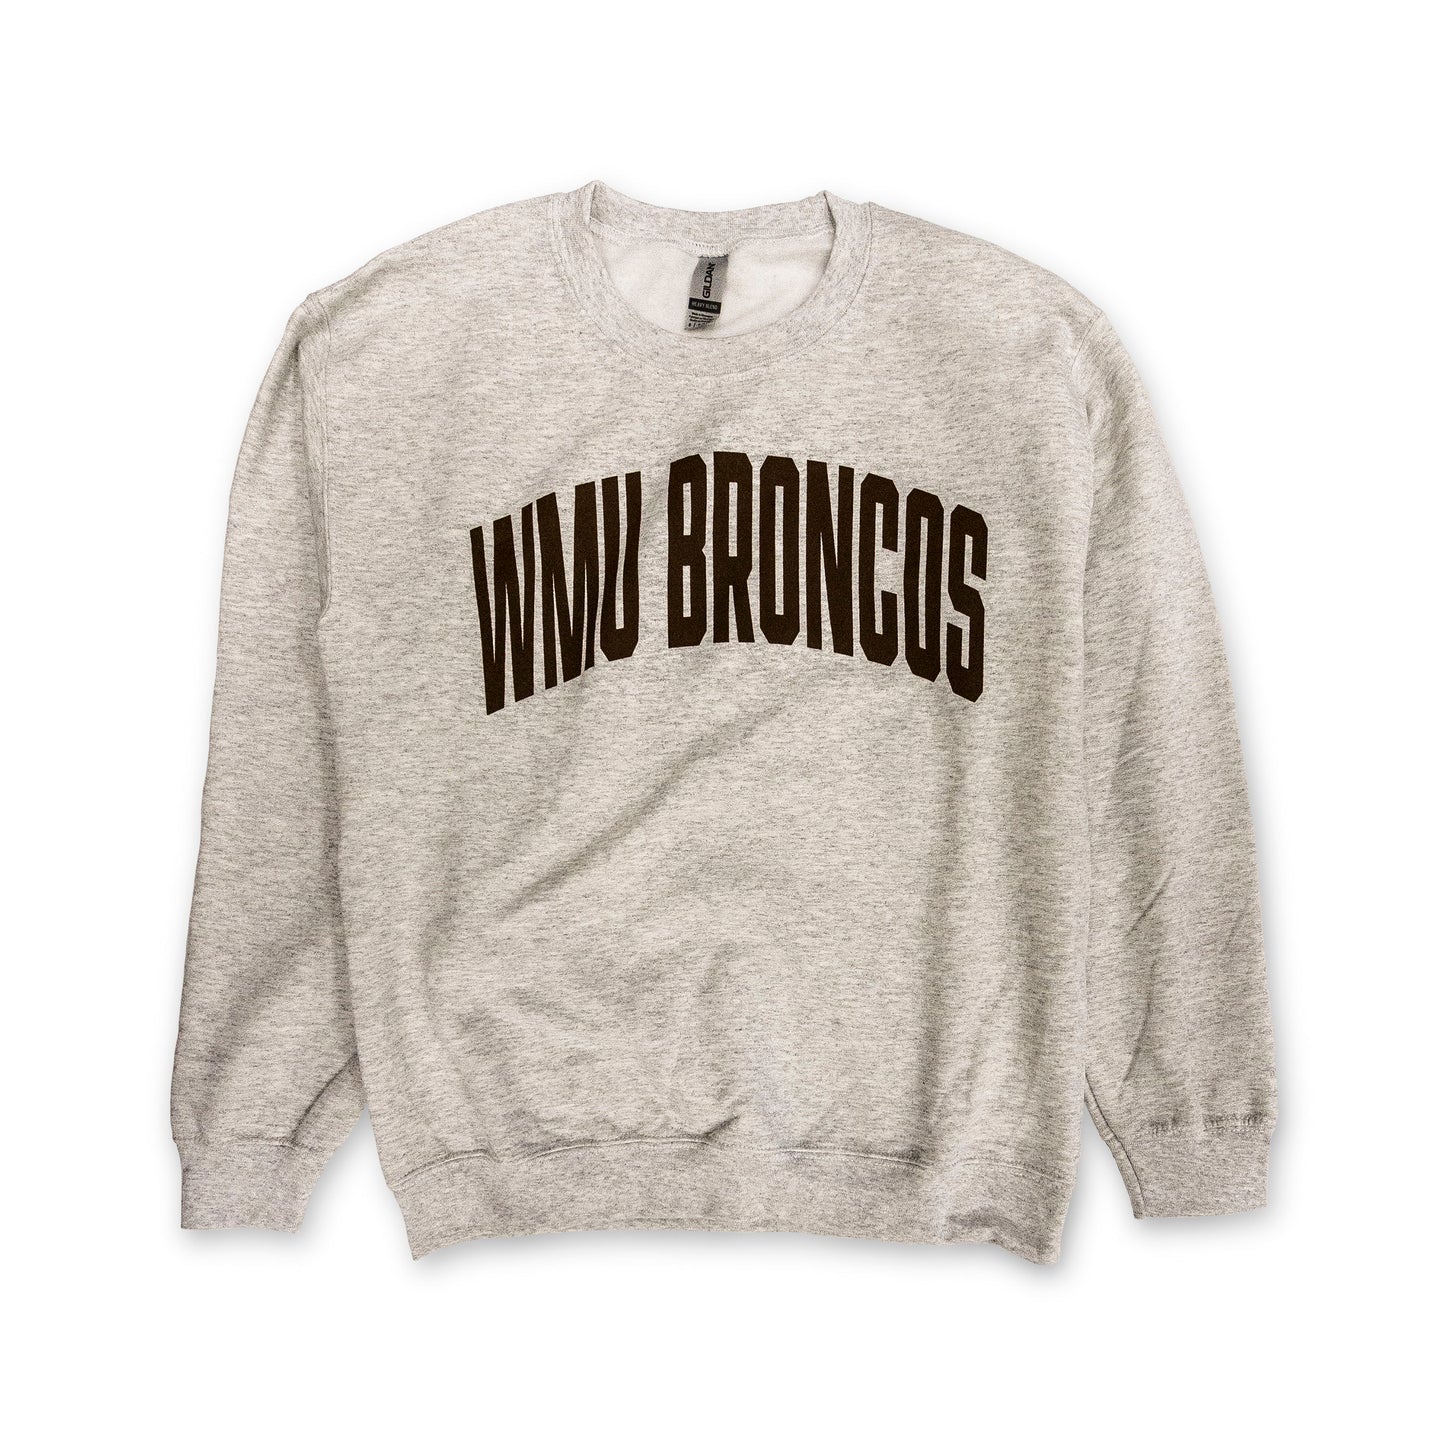 WMU Broncos Crewneck Sweatshirt